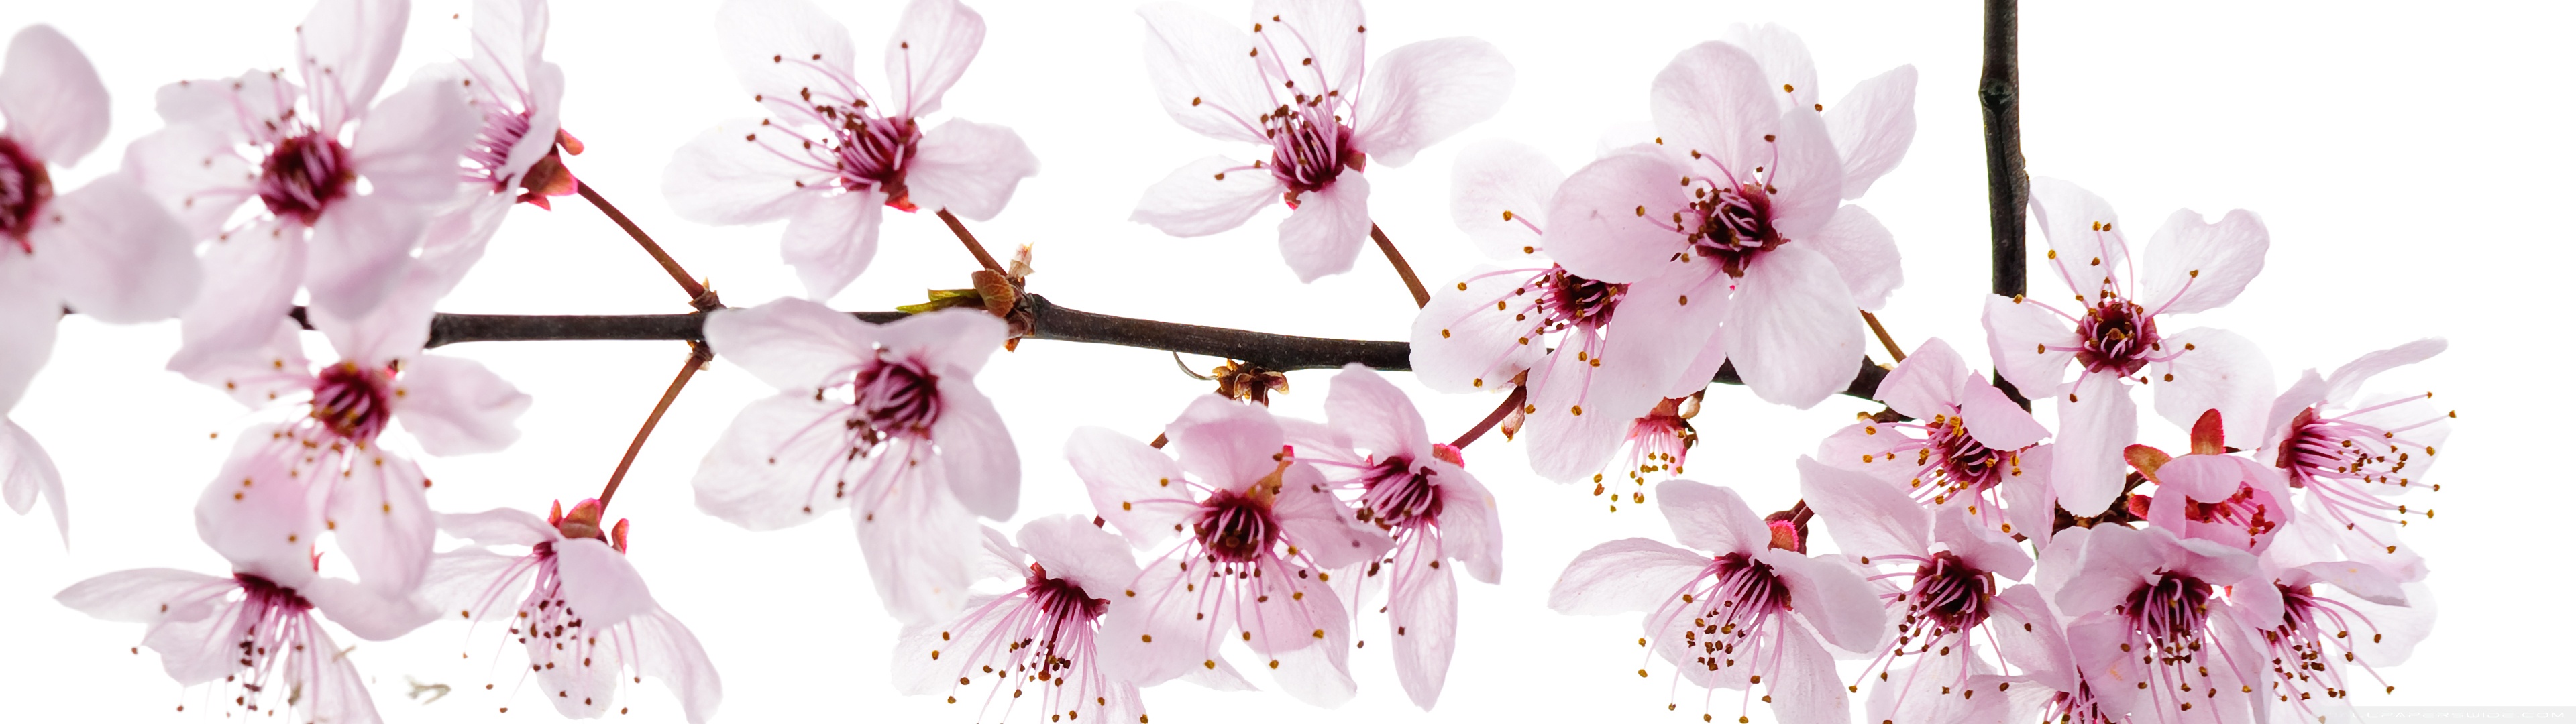 Spring Blooming Flowers Ultra HD Desktop Background Wallpaper for 4K UHD TV, Multi Display, Dual Monitor, Tablet